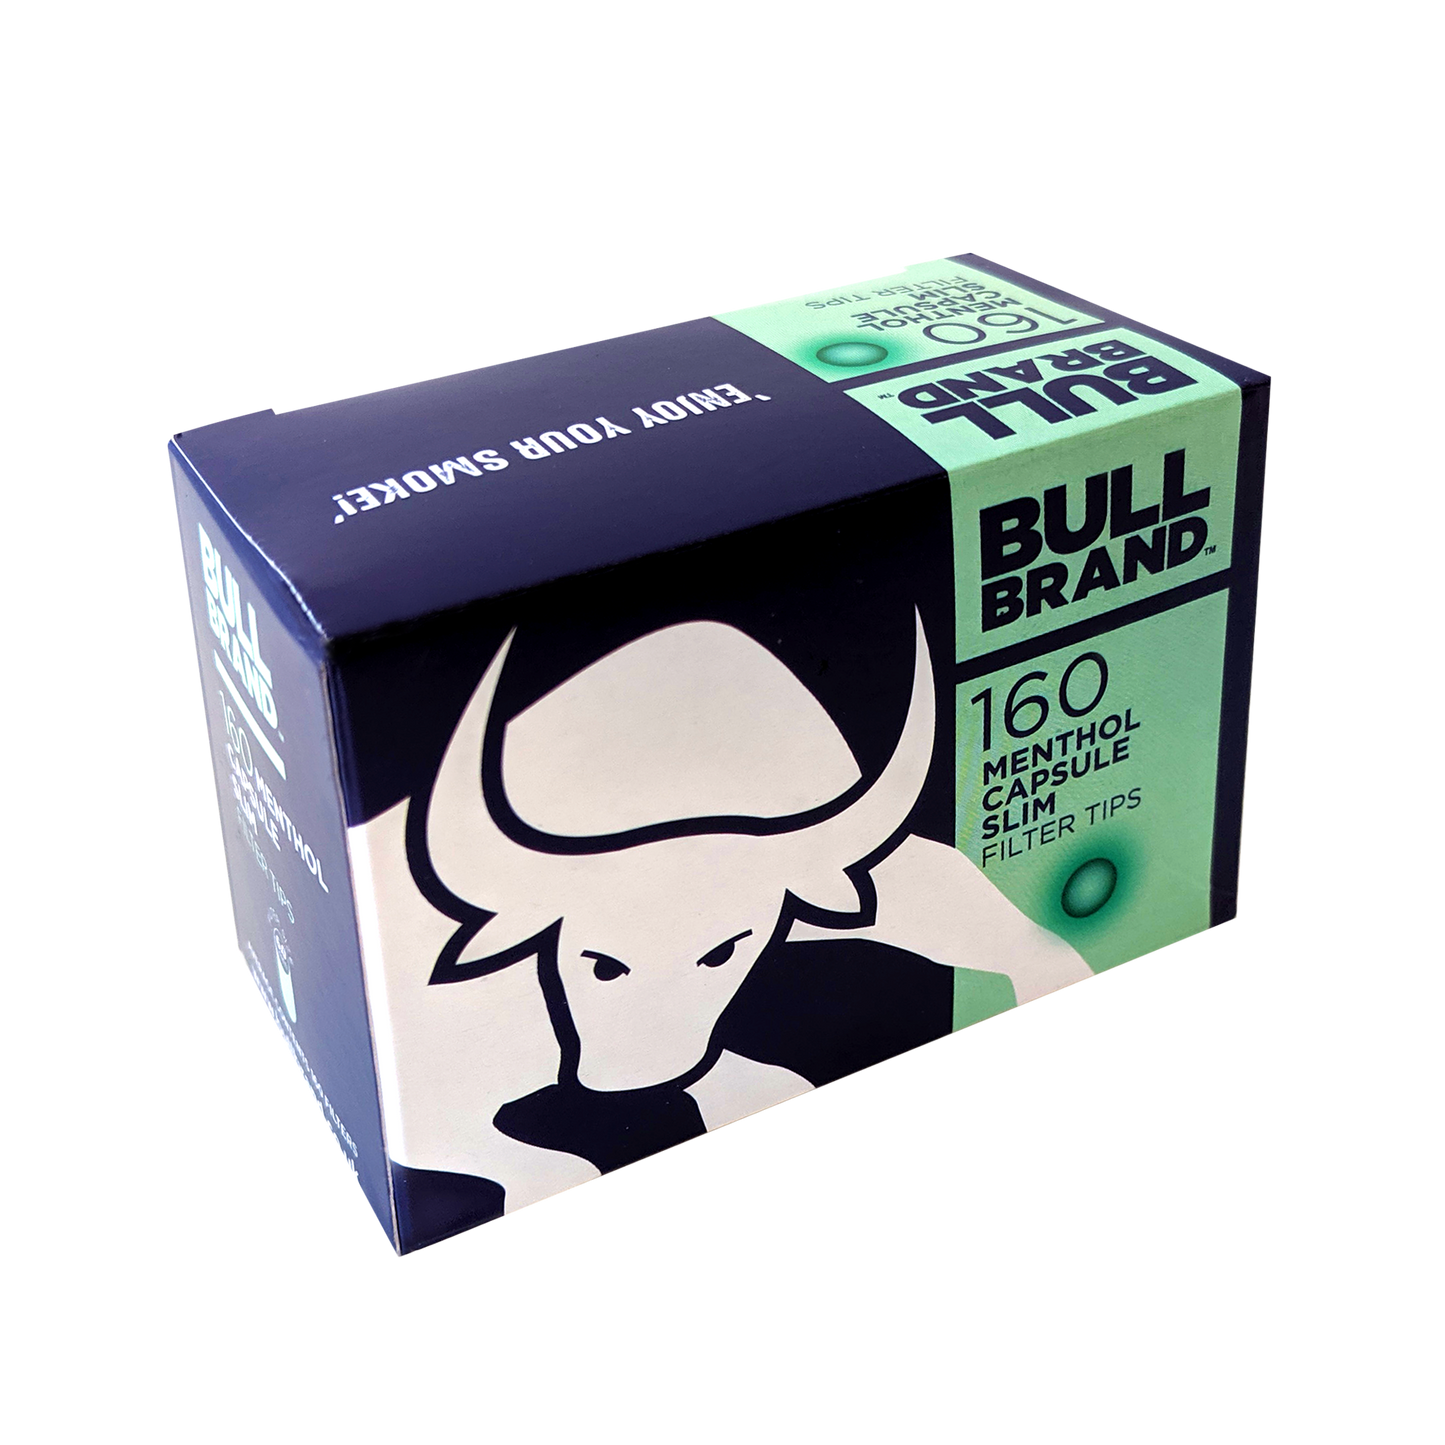 Bull Brand Menthol Capsule Slim Filter Tips